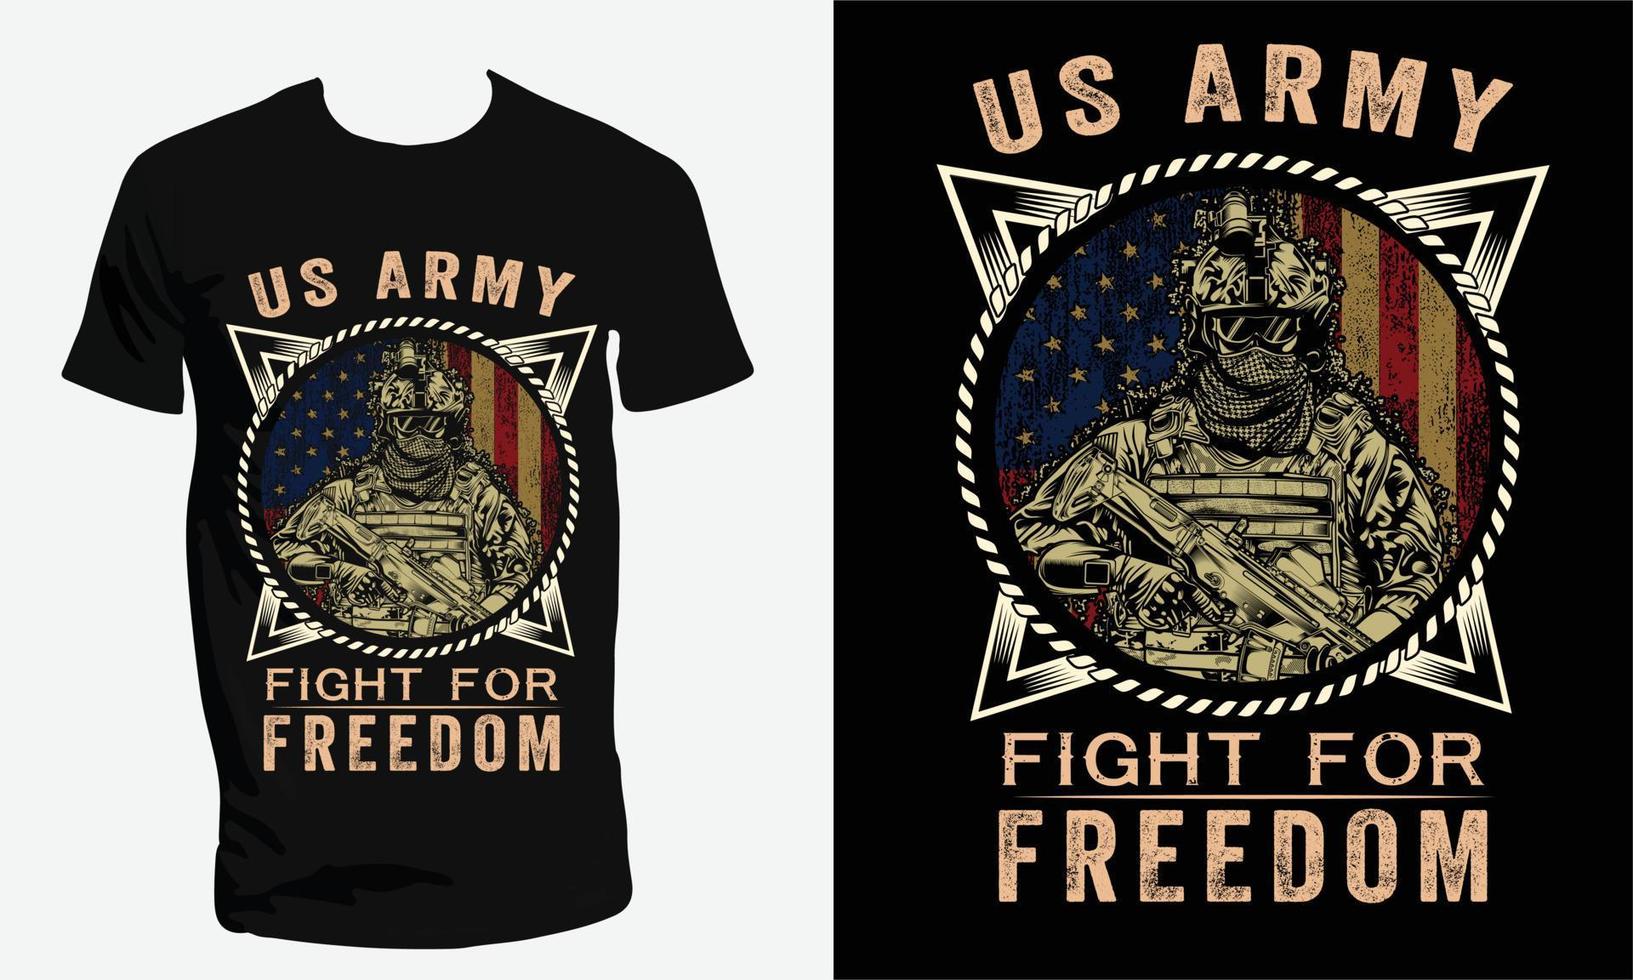 US-Armeeveteran und US-Militär-T-Shirt-Design vektor